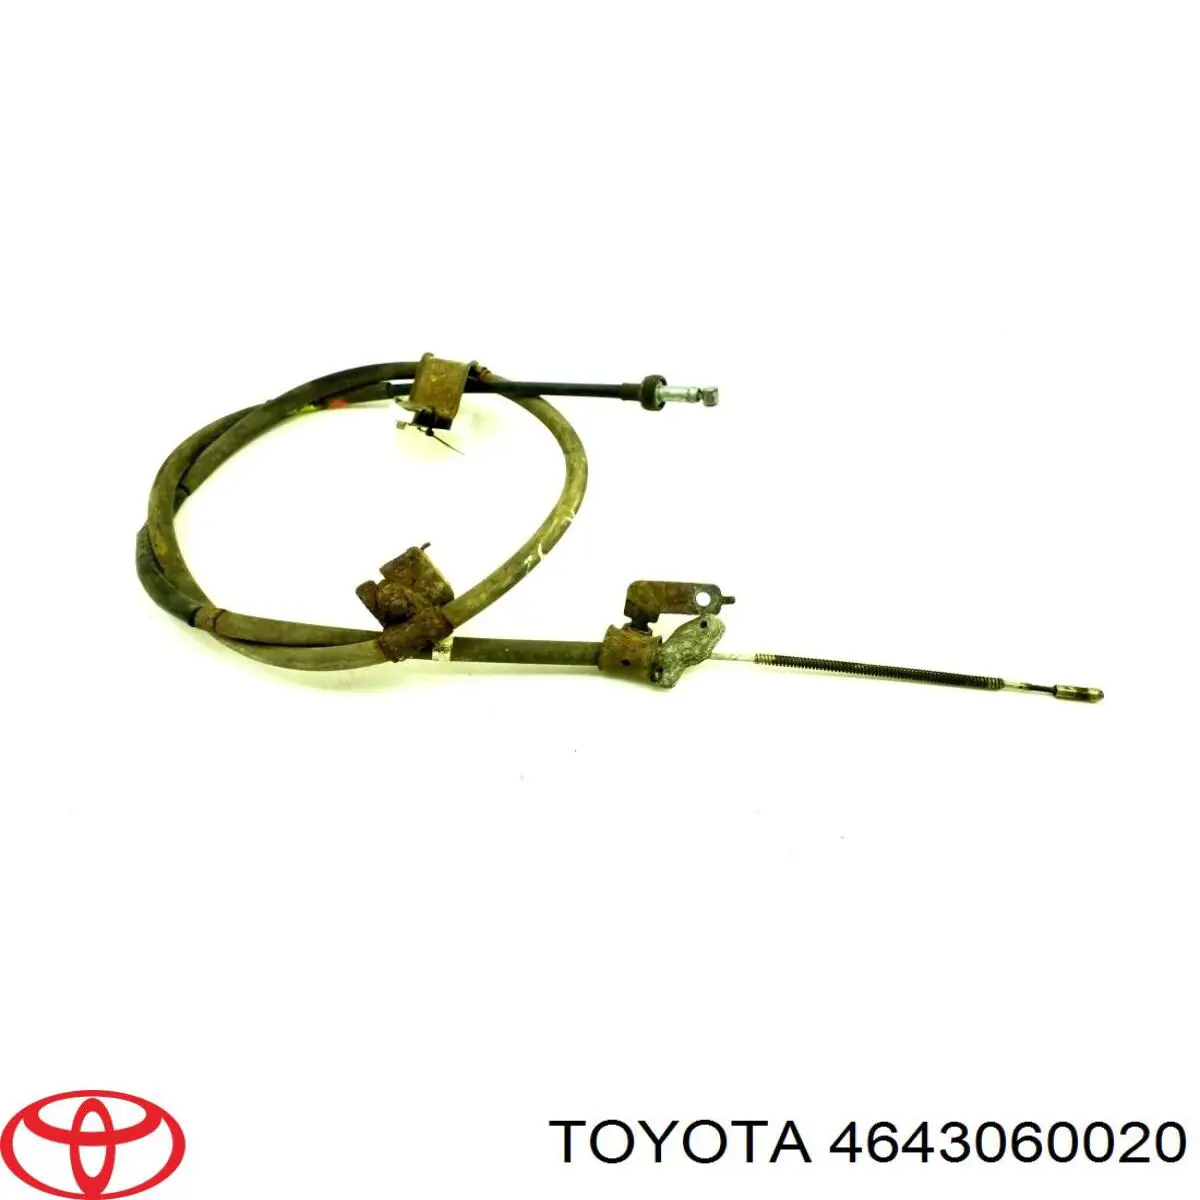 4643060020 Toyota cabo do freio de estacionamento traseiro esquerdo